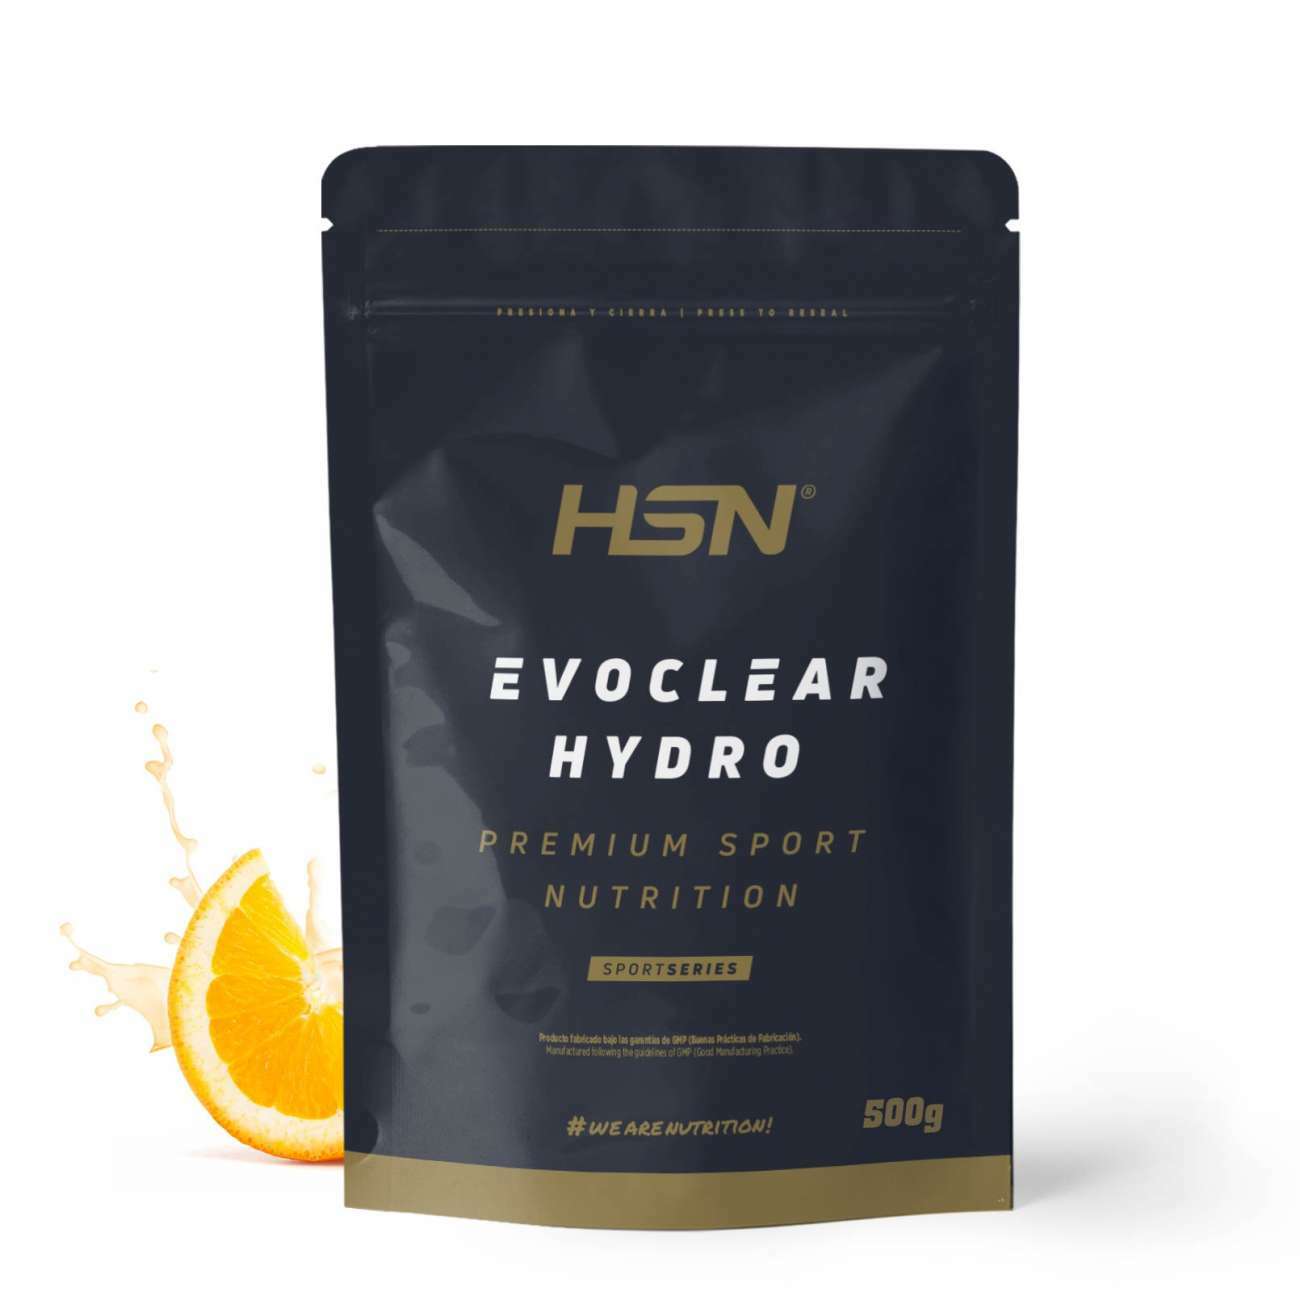 HSN Evoclear hydro 500g naranja